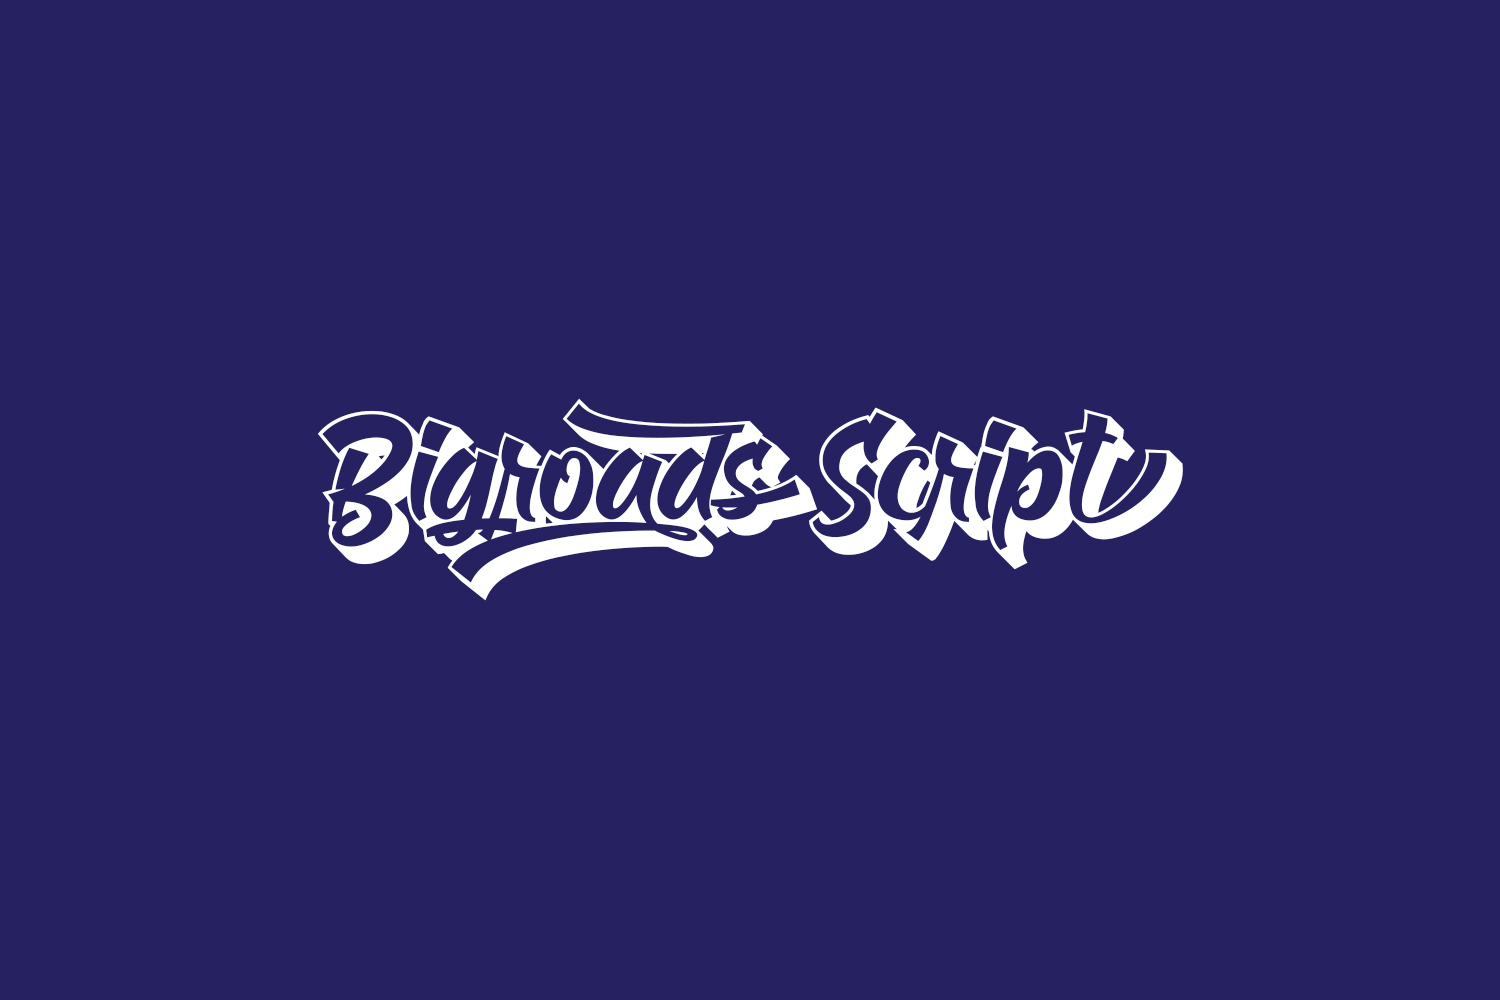 Bigroads Script Free Font